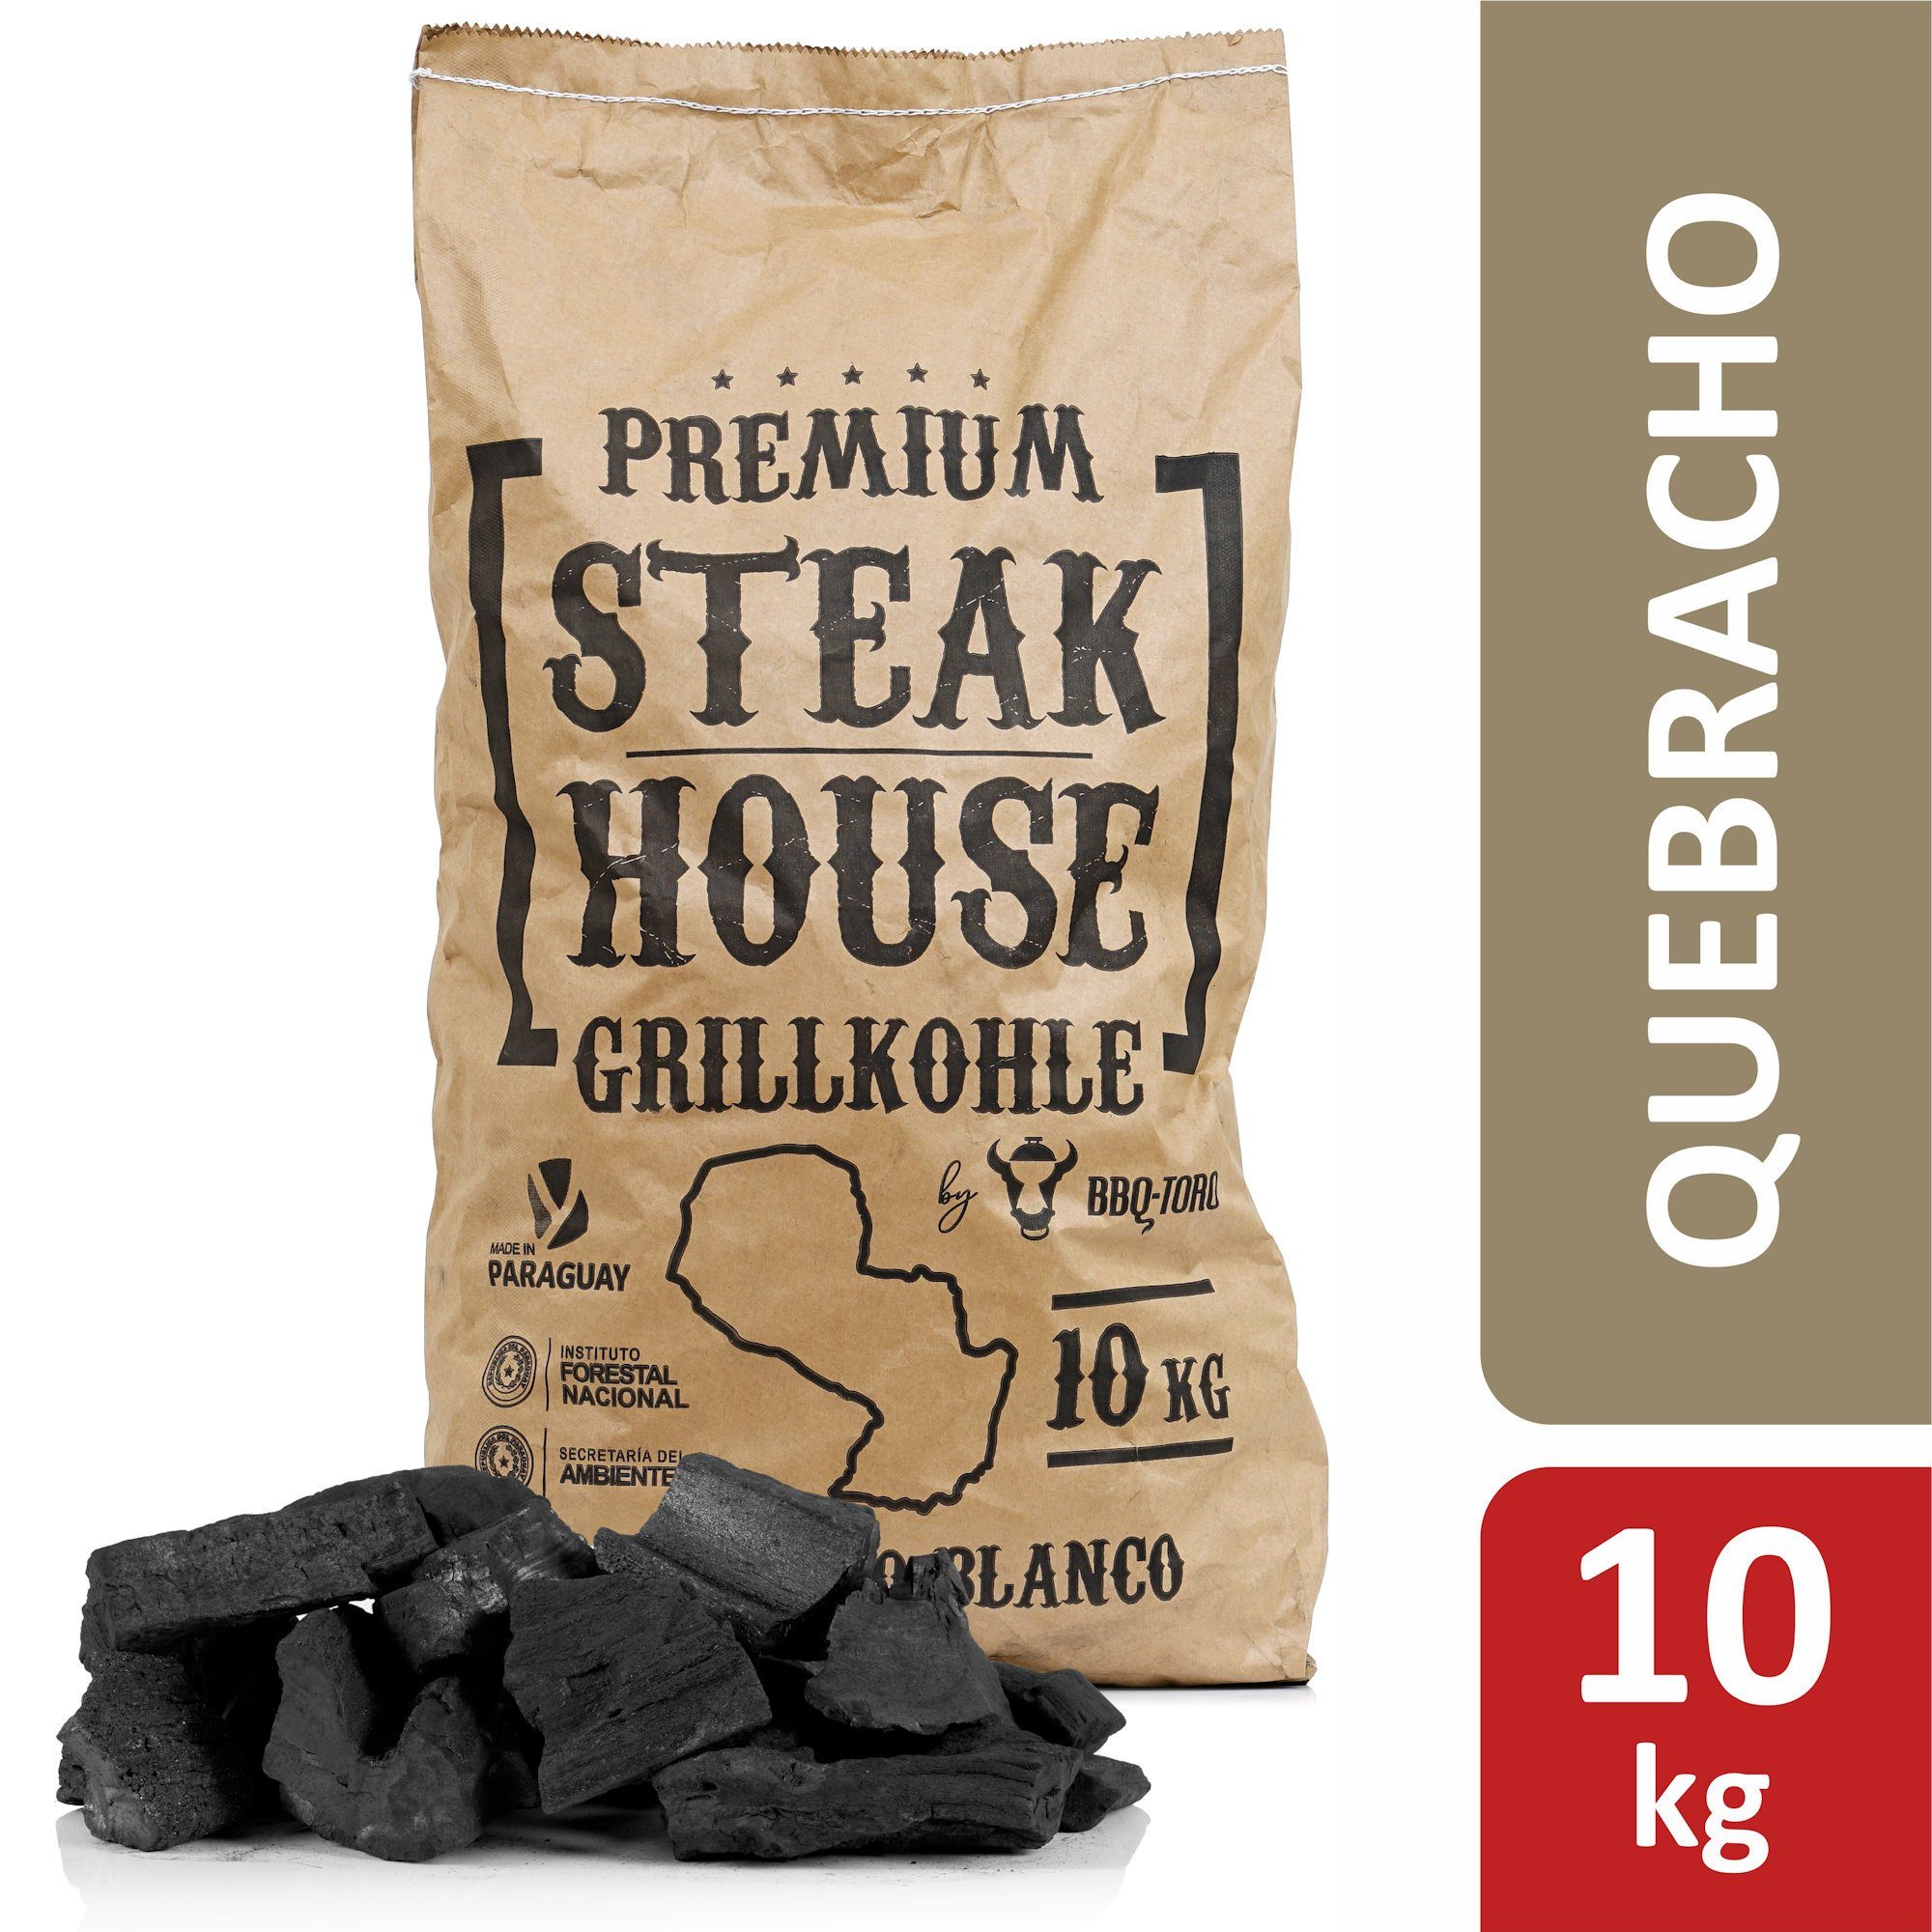 BBQ-Toro Grillkohle BBQ-Toro Premium Steak House Grillkohle, 10 kg, Querbracho Blanco, 10.00 kg